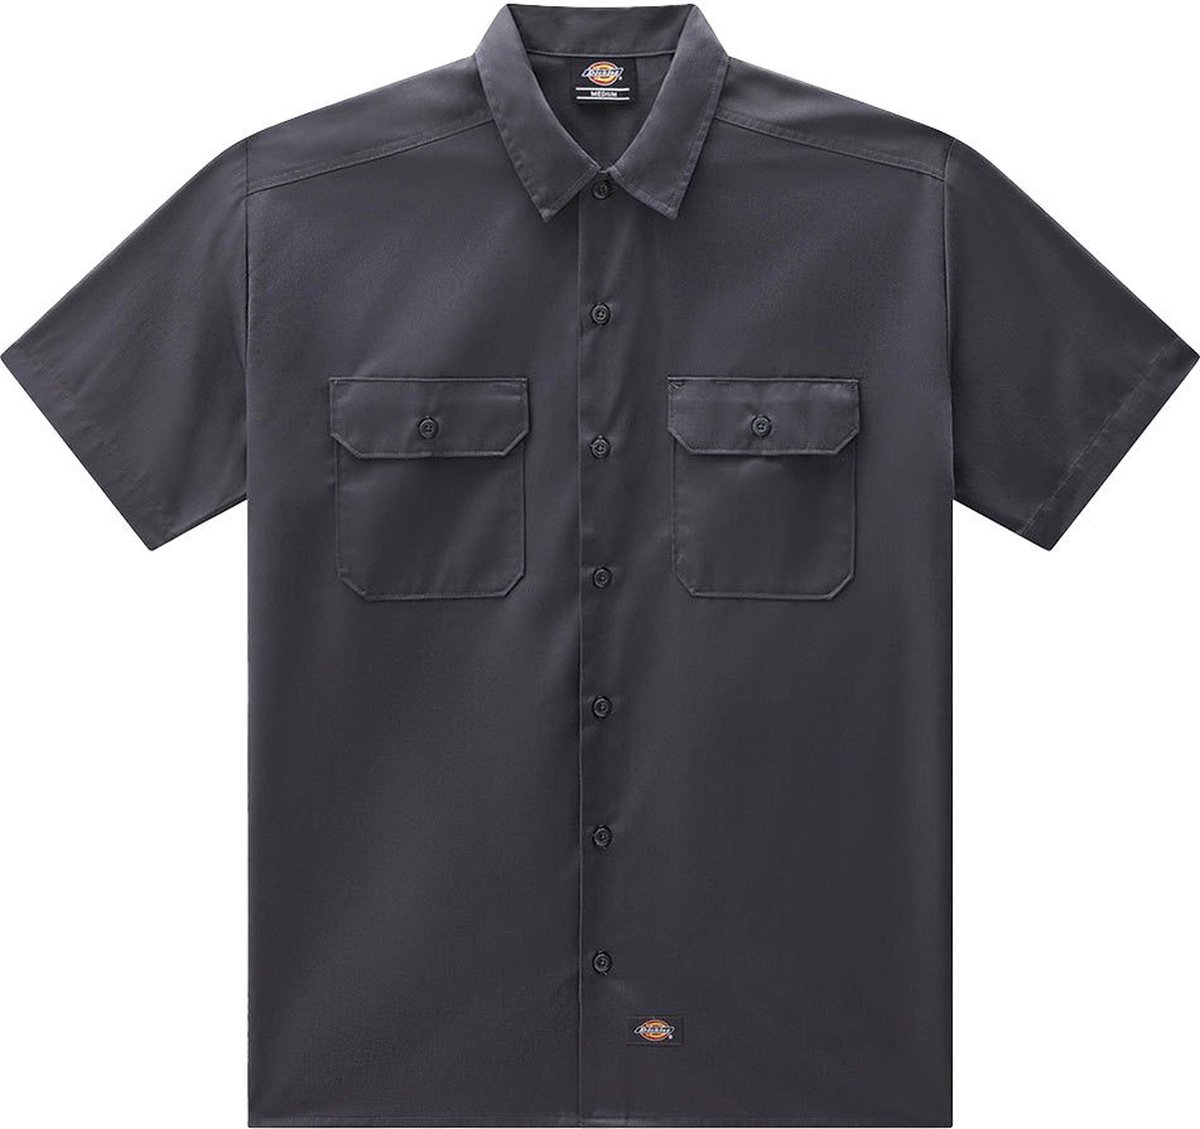 Dickies Work Short Sleeve Overhemd - Charcoal Grey